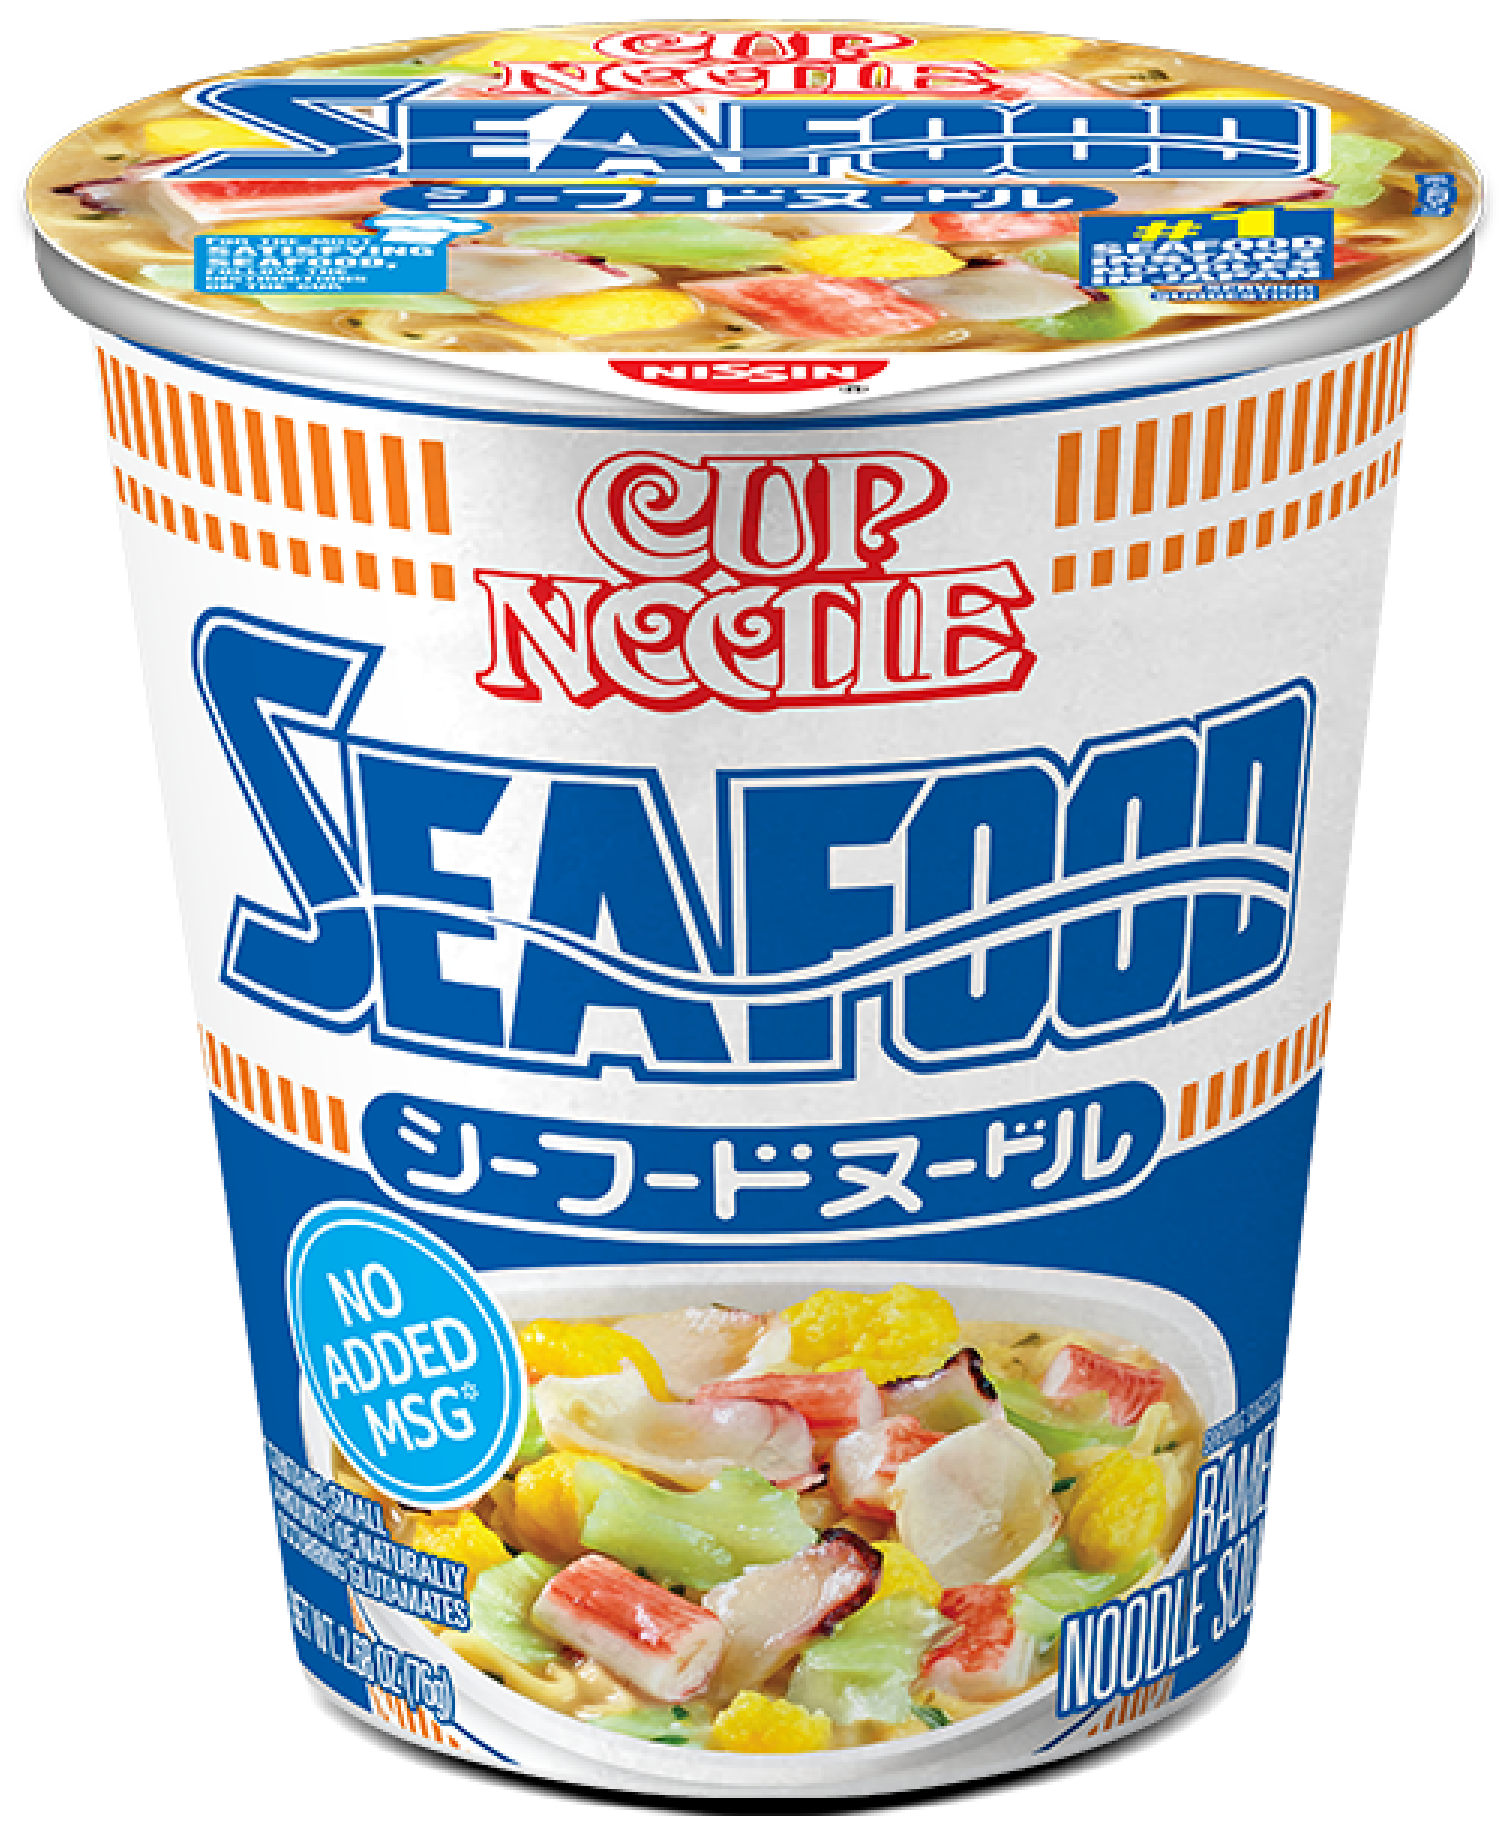 Cup Noodles Seafood